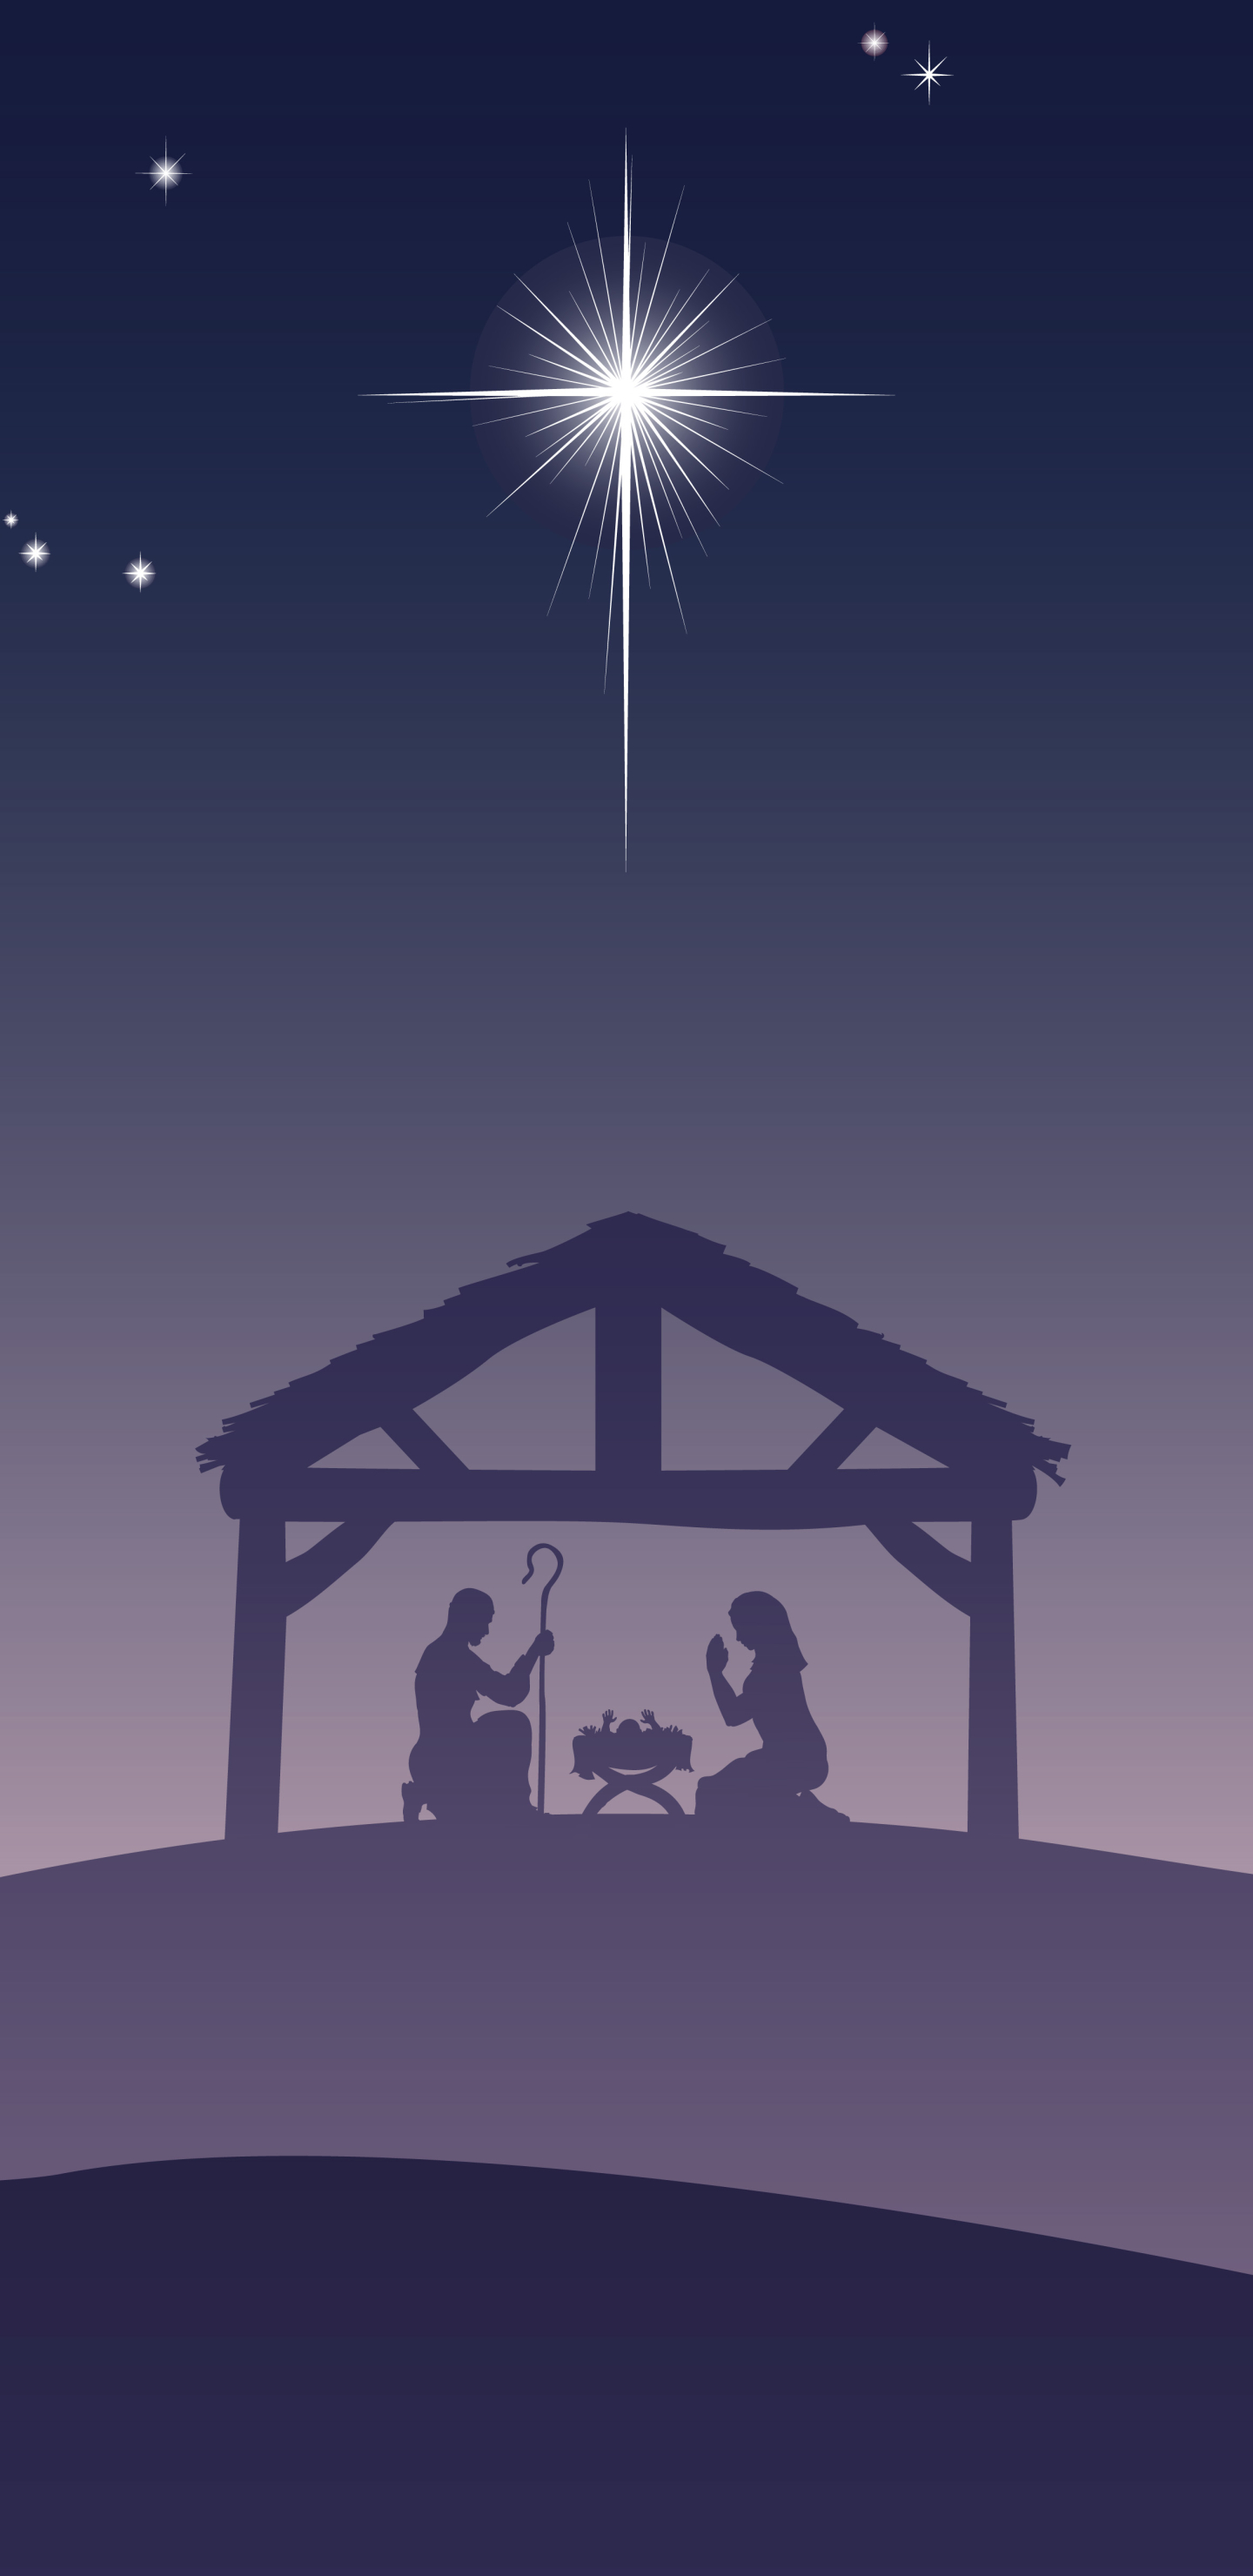 jesus, the three wise men, mary (mother of jesus), holiday, christmas, night, stars